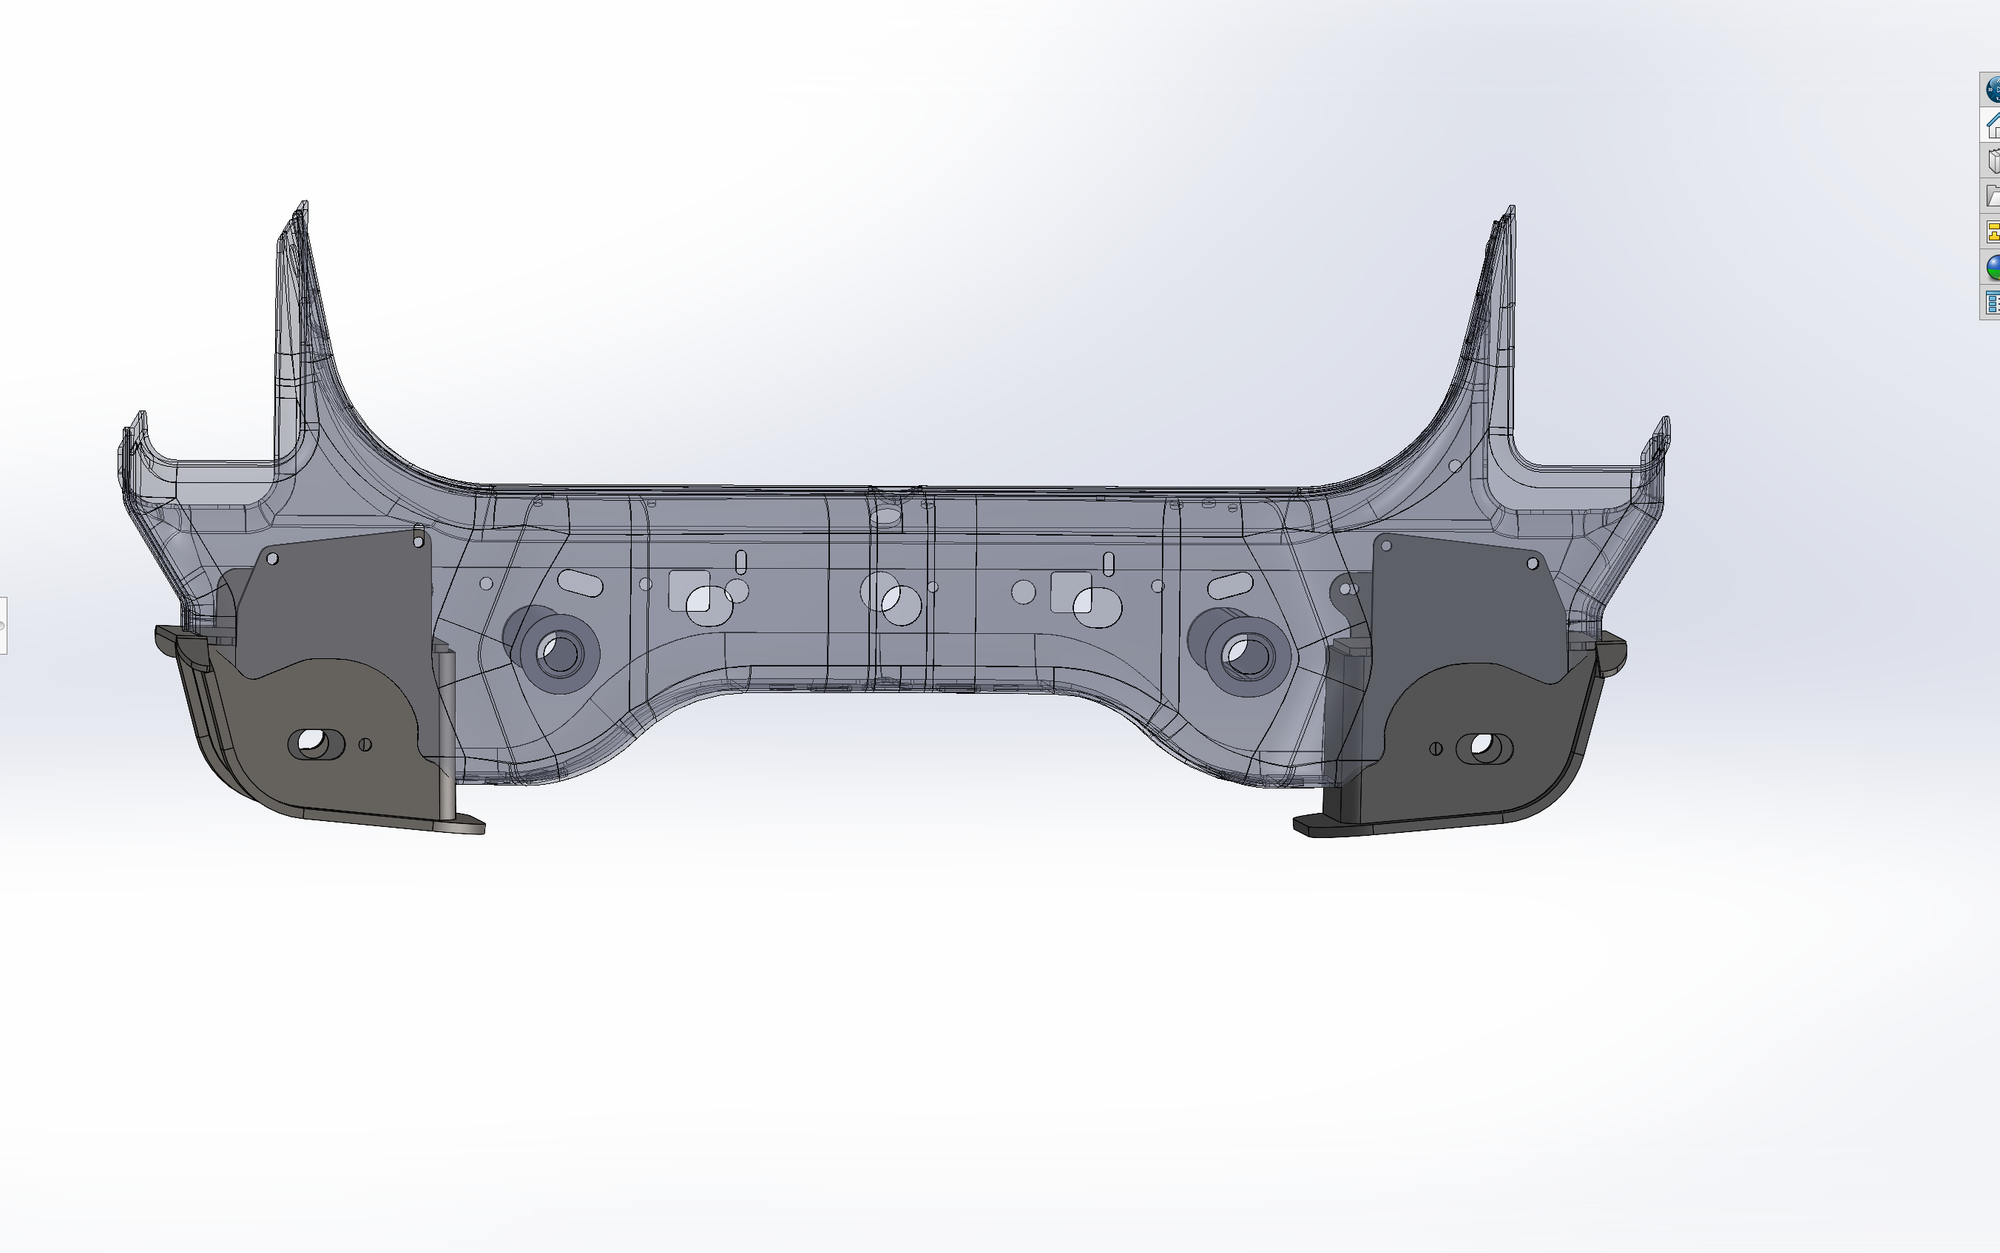 2010 - 2014 GEN 1 Raptor Front Lower Arm Pocket Replacement kit